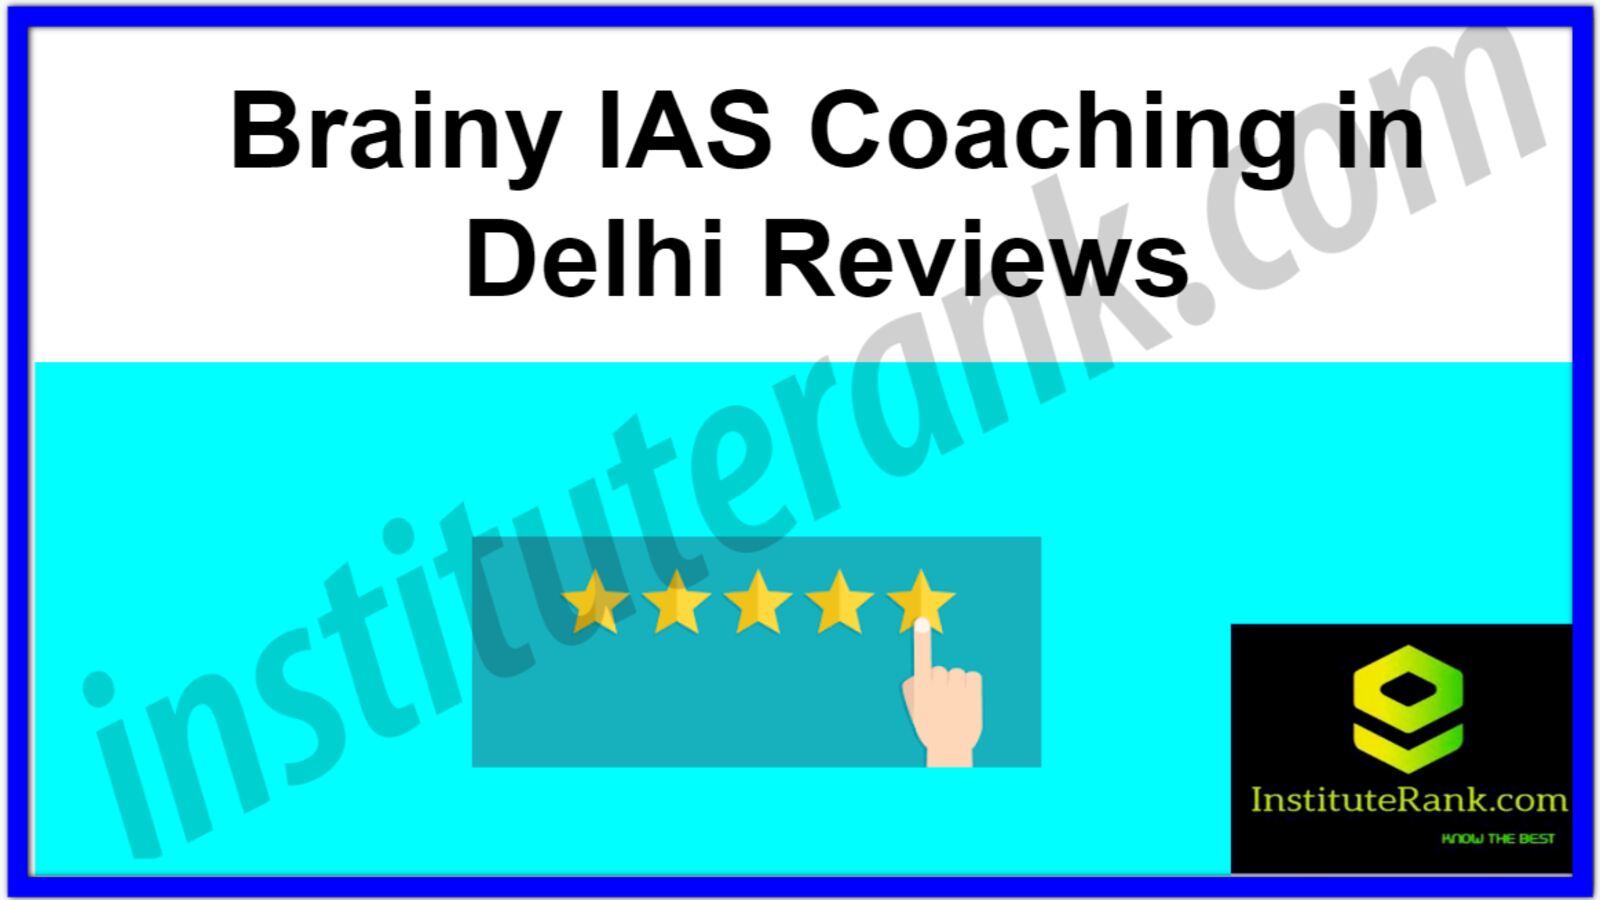 Brainy IAS Coaching in Delhi